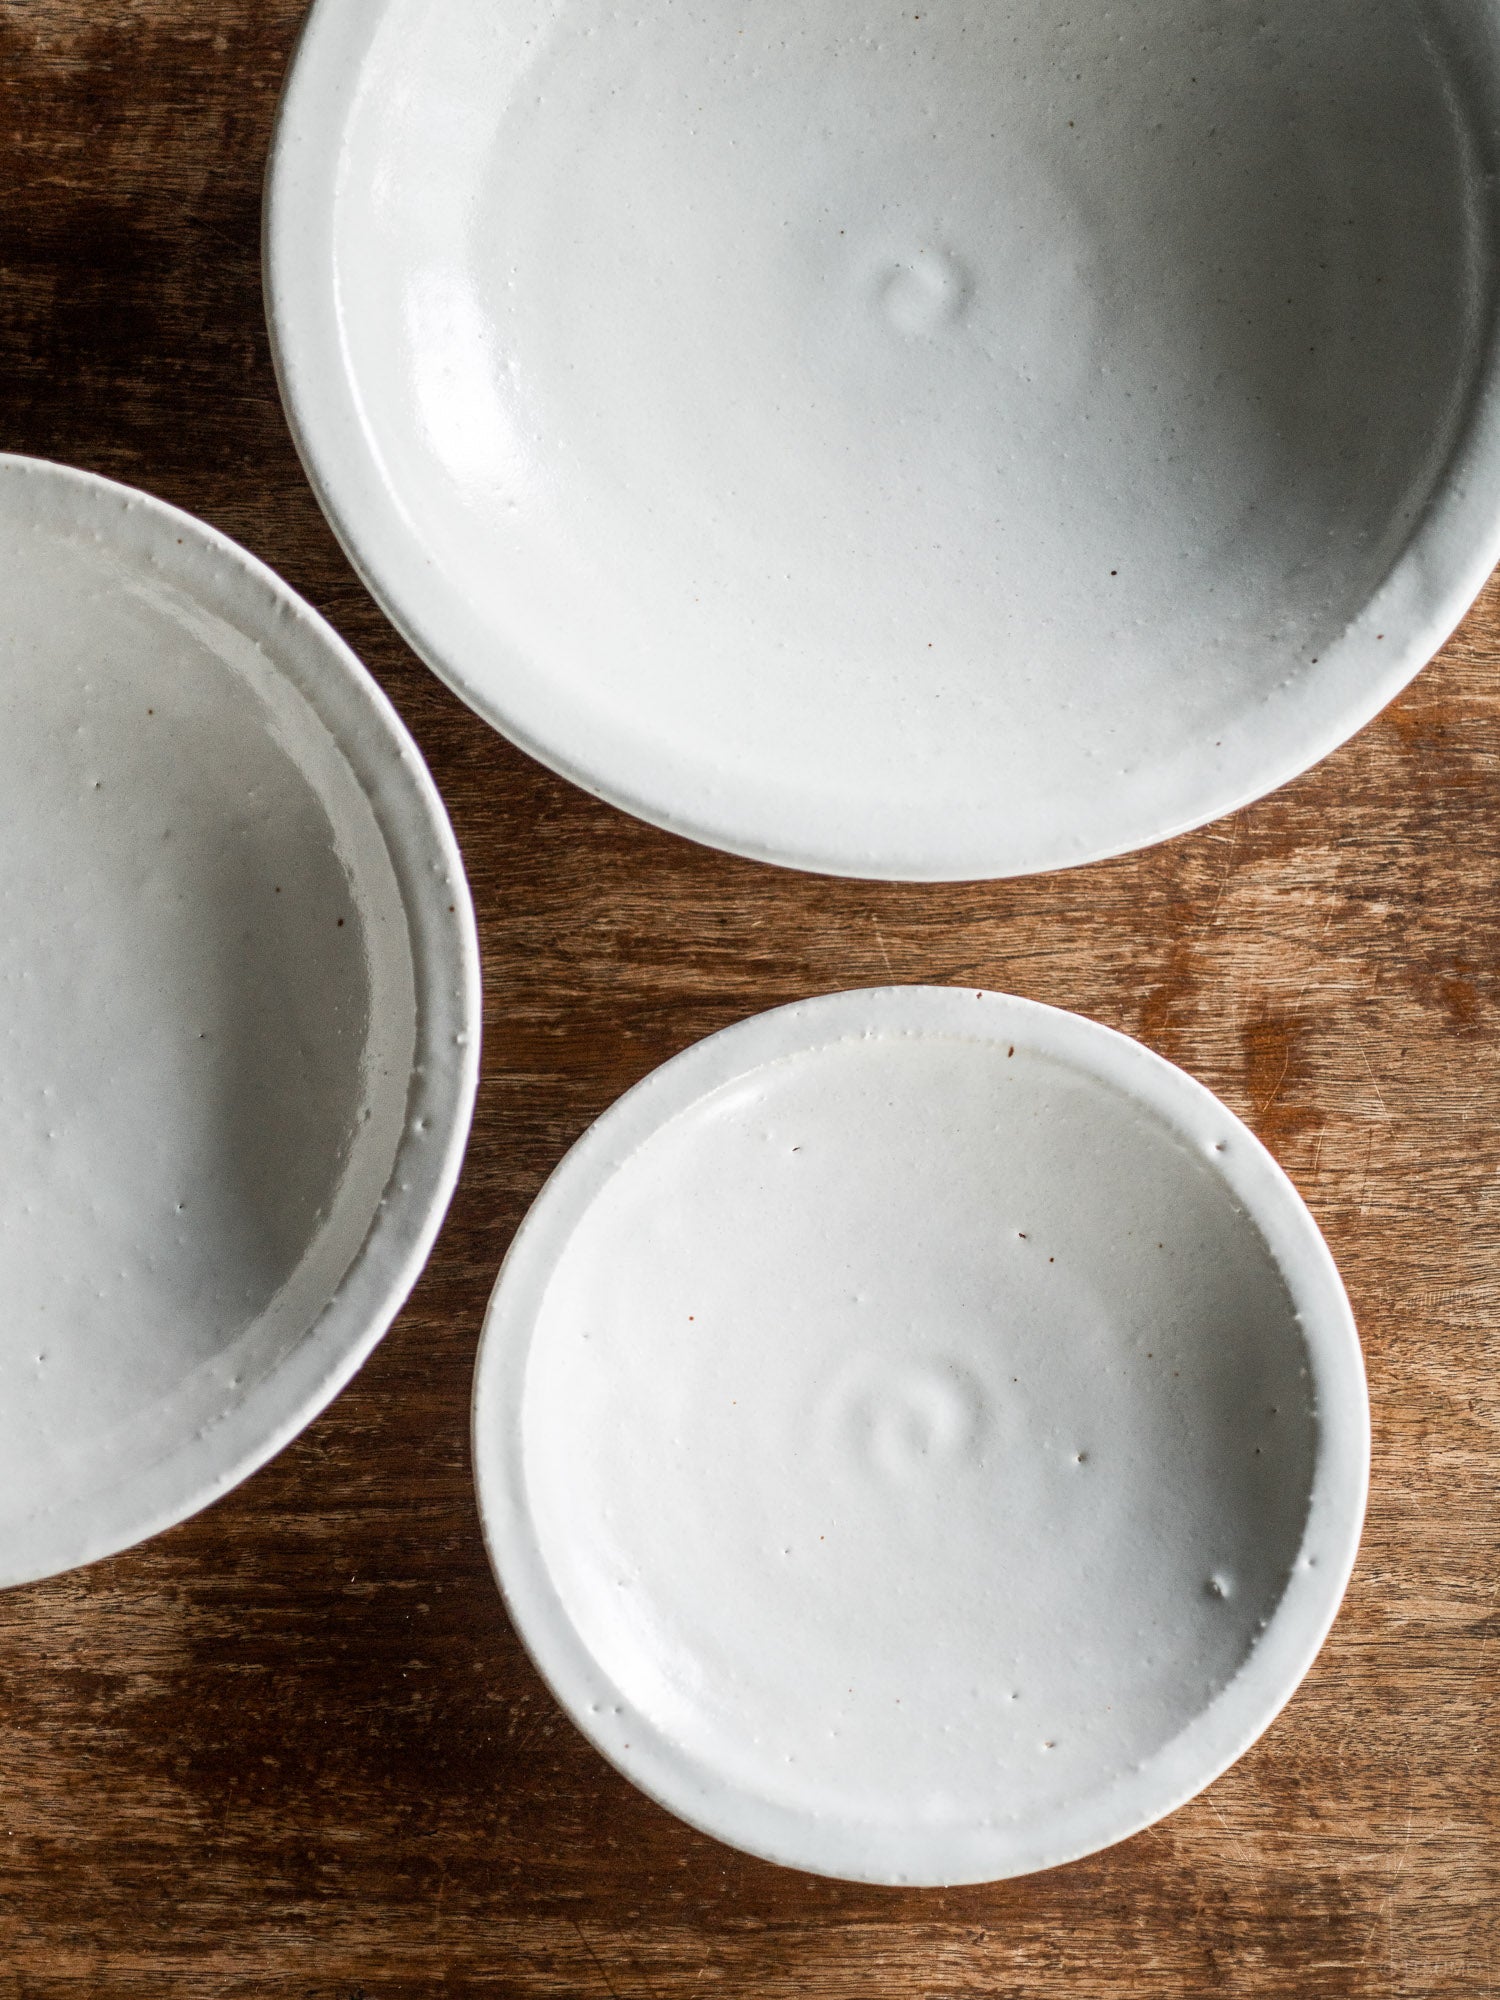 Azmaya iga ware plates in three sizes in a white shino glaze